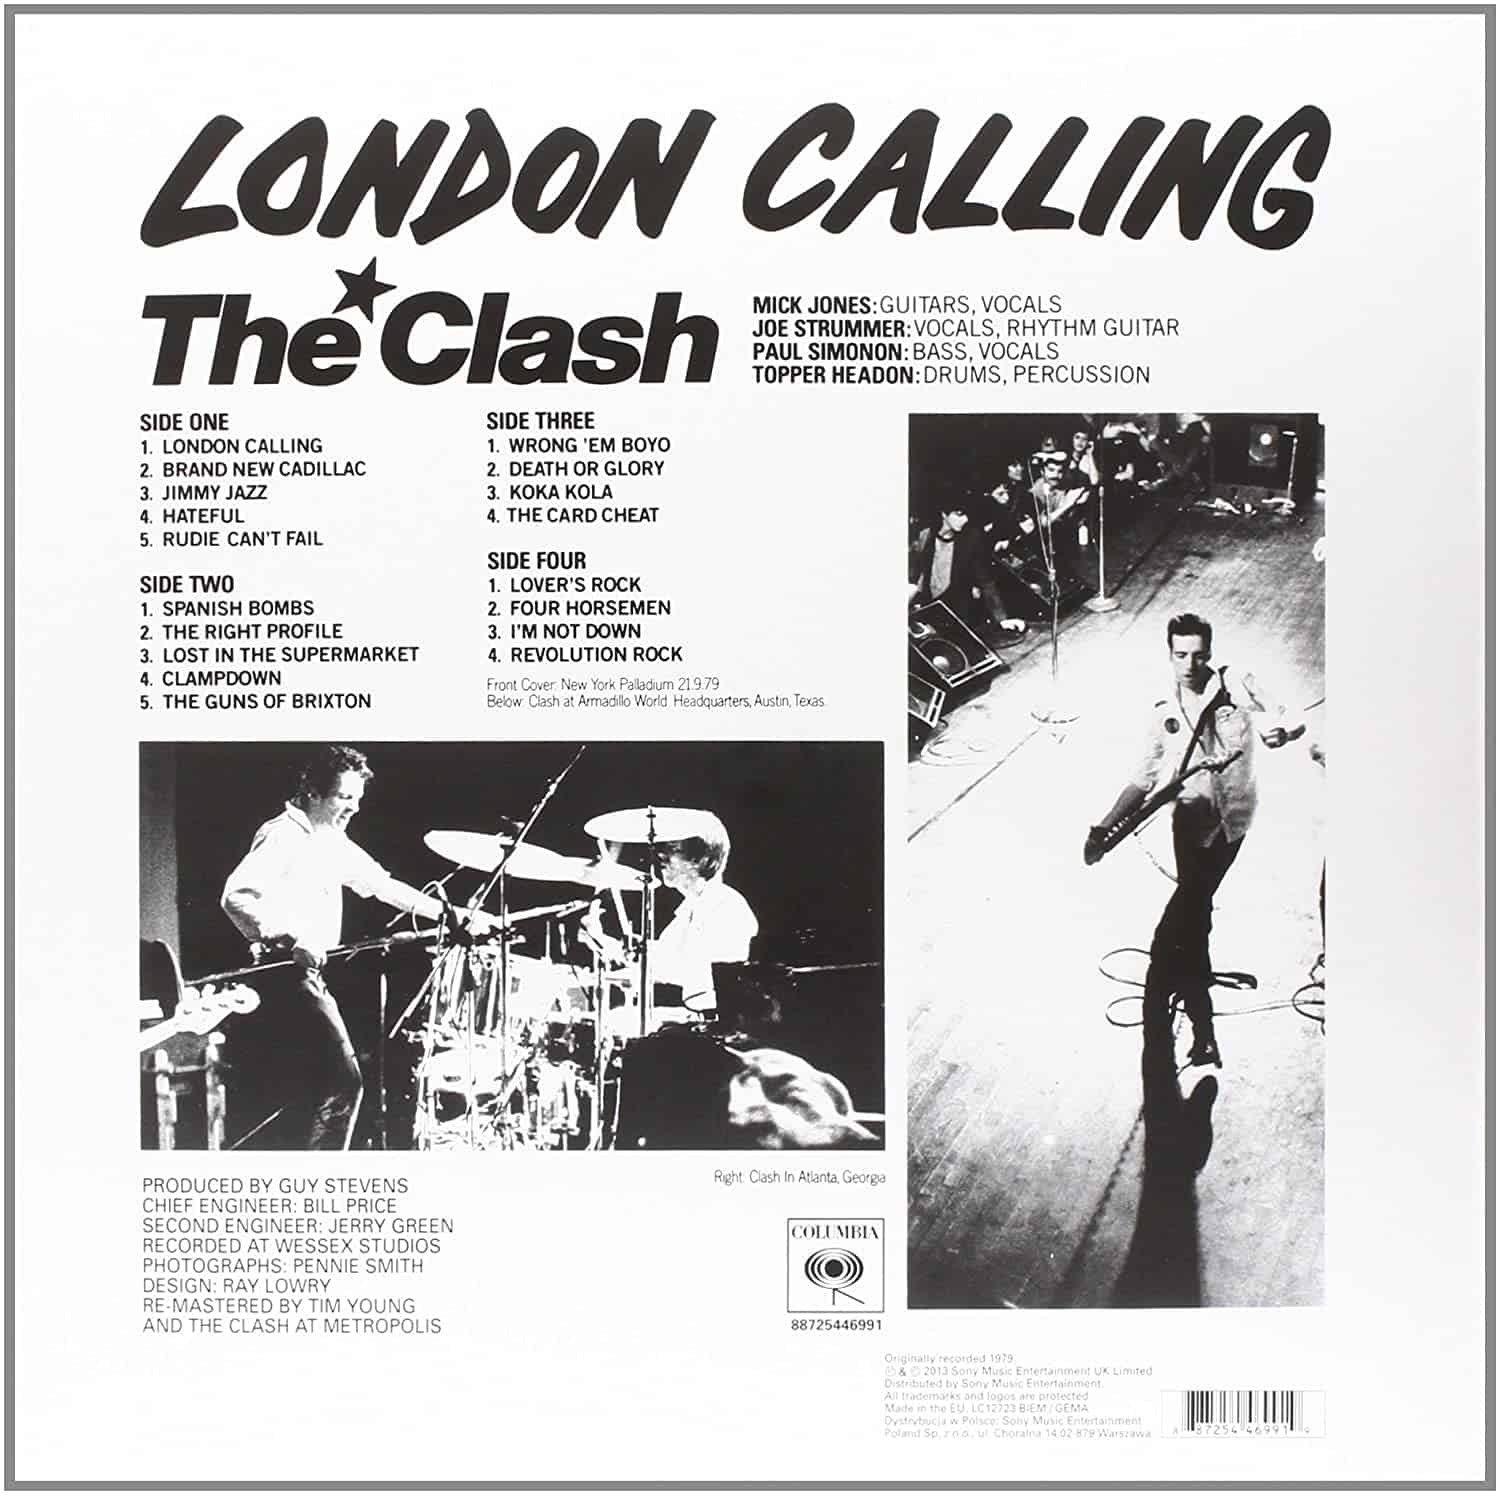 The-Clash-London-Calling-vinyl-record-album-back